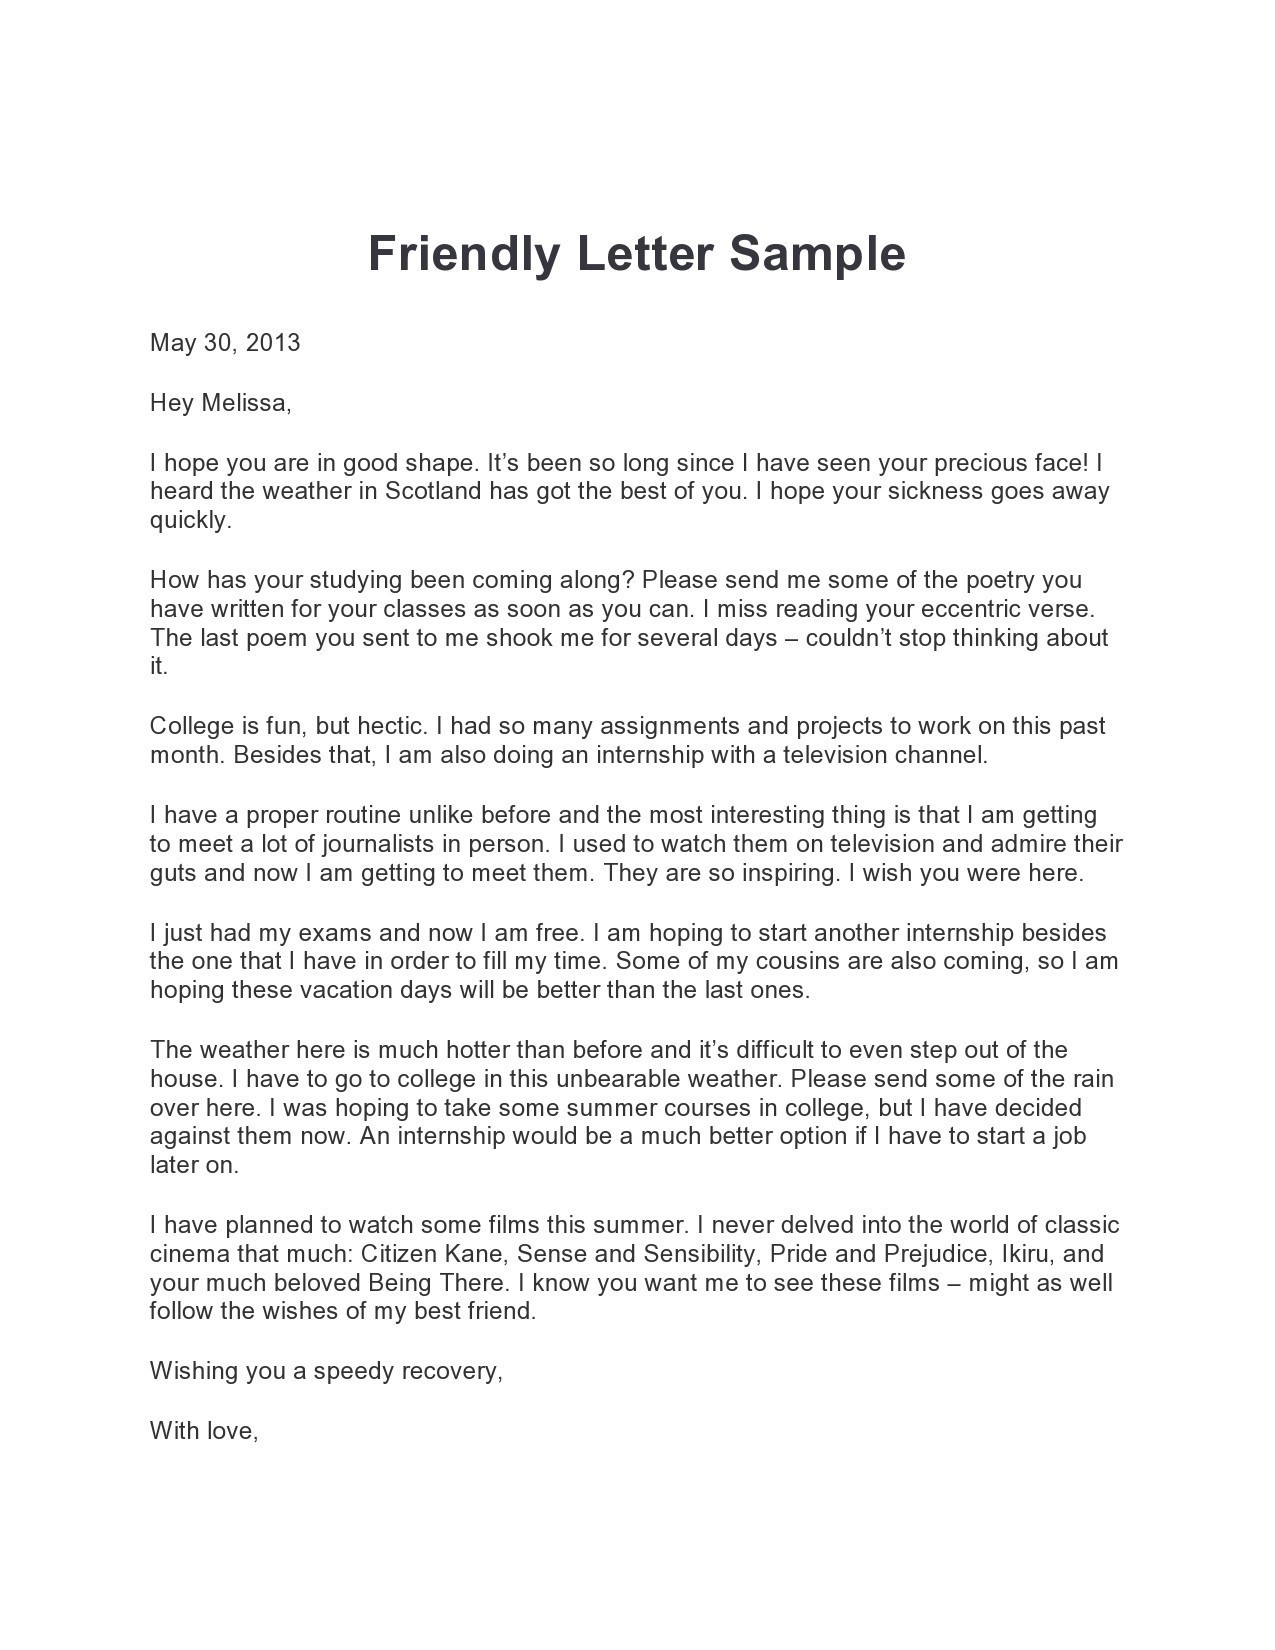 Free friendly letter format 23